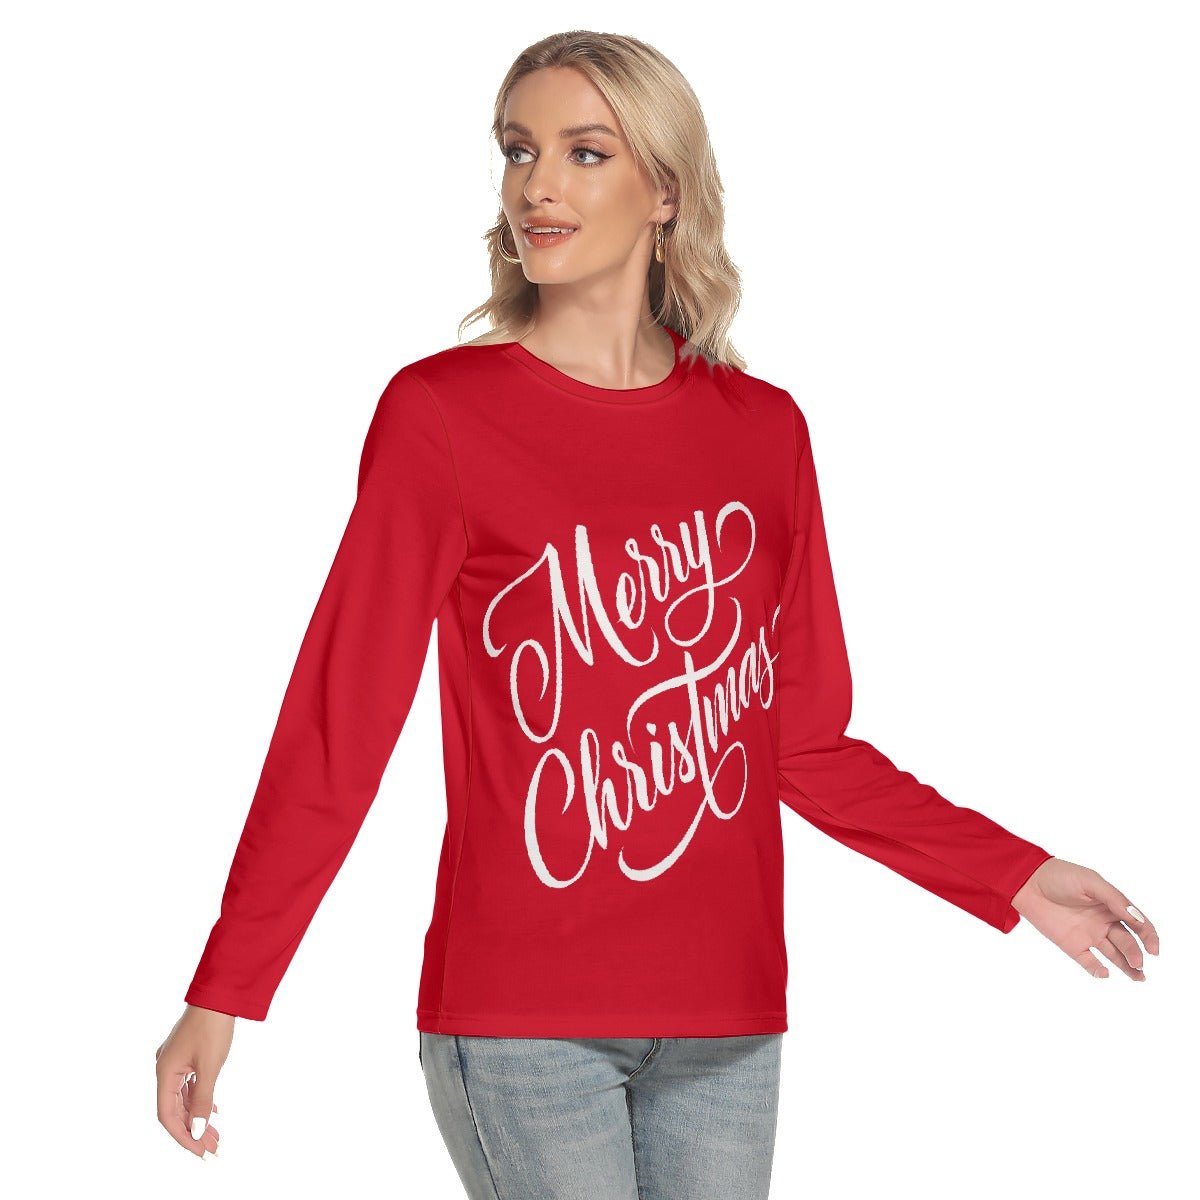 Women's Long Sleeve Christmas T-shirt - Merry Christmas - Red - Festive Style